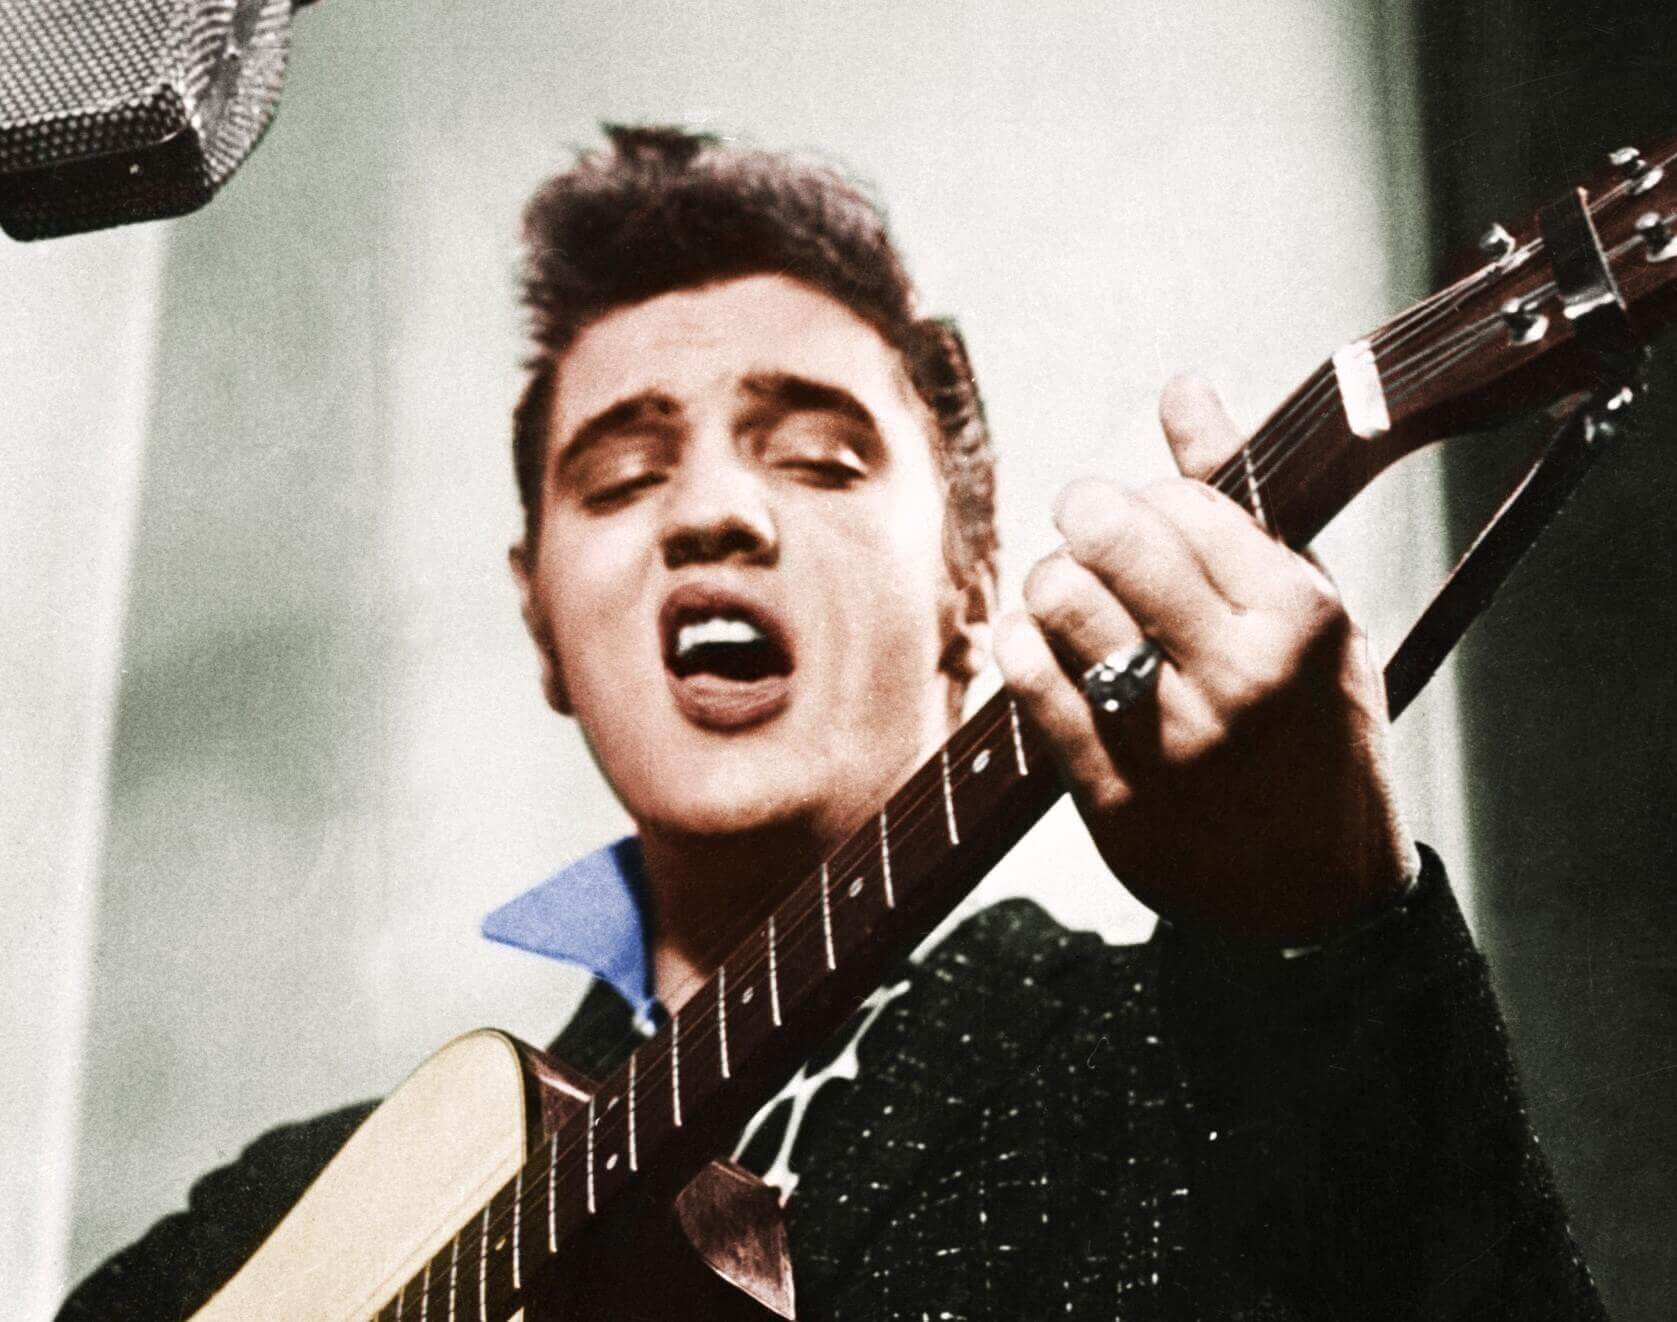 "Blue Suede Shoes" singer Elvis Presley with a guitar